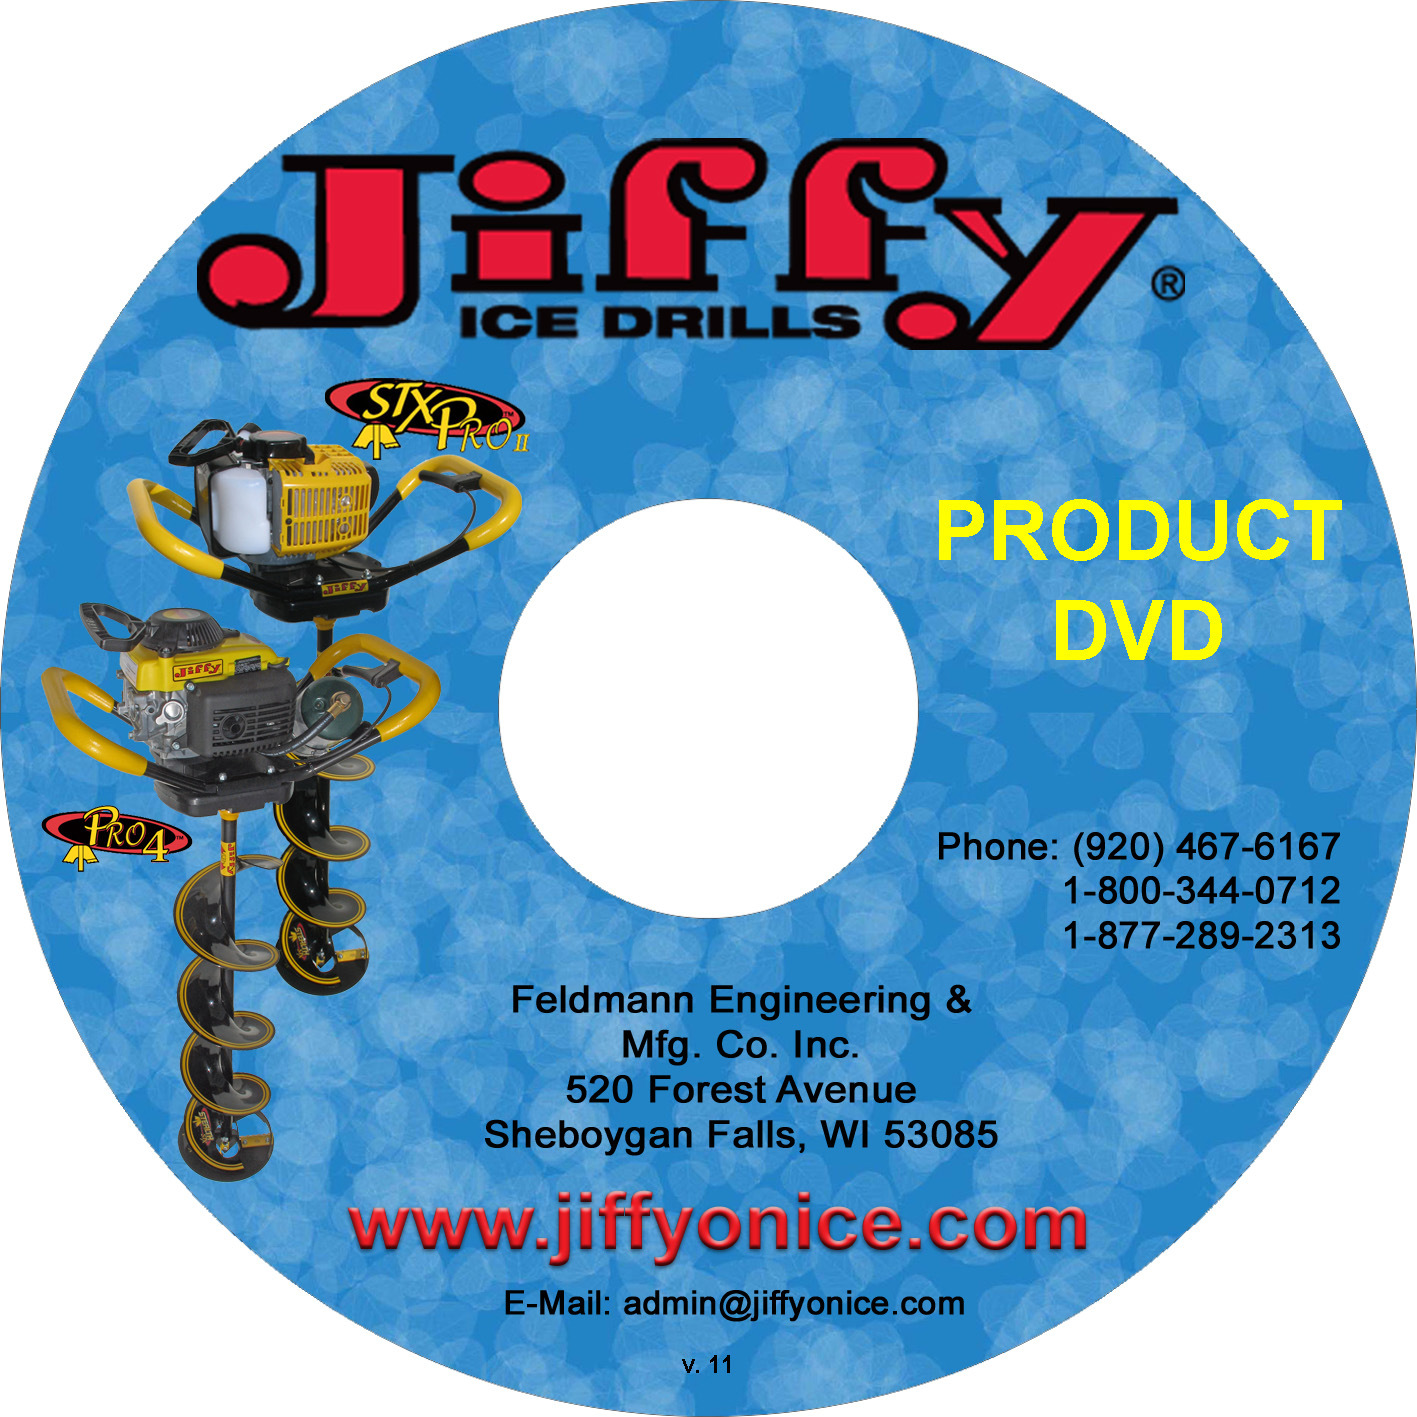 Jiffy临沂DVD cover 2011